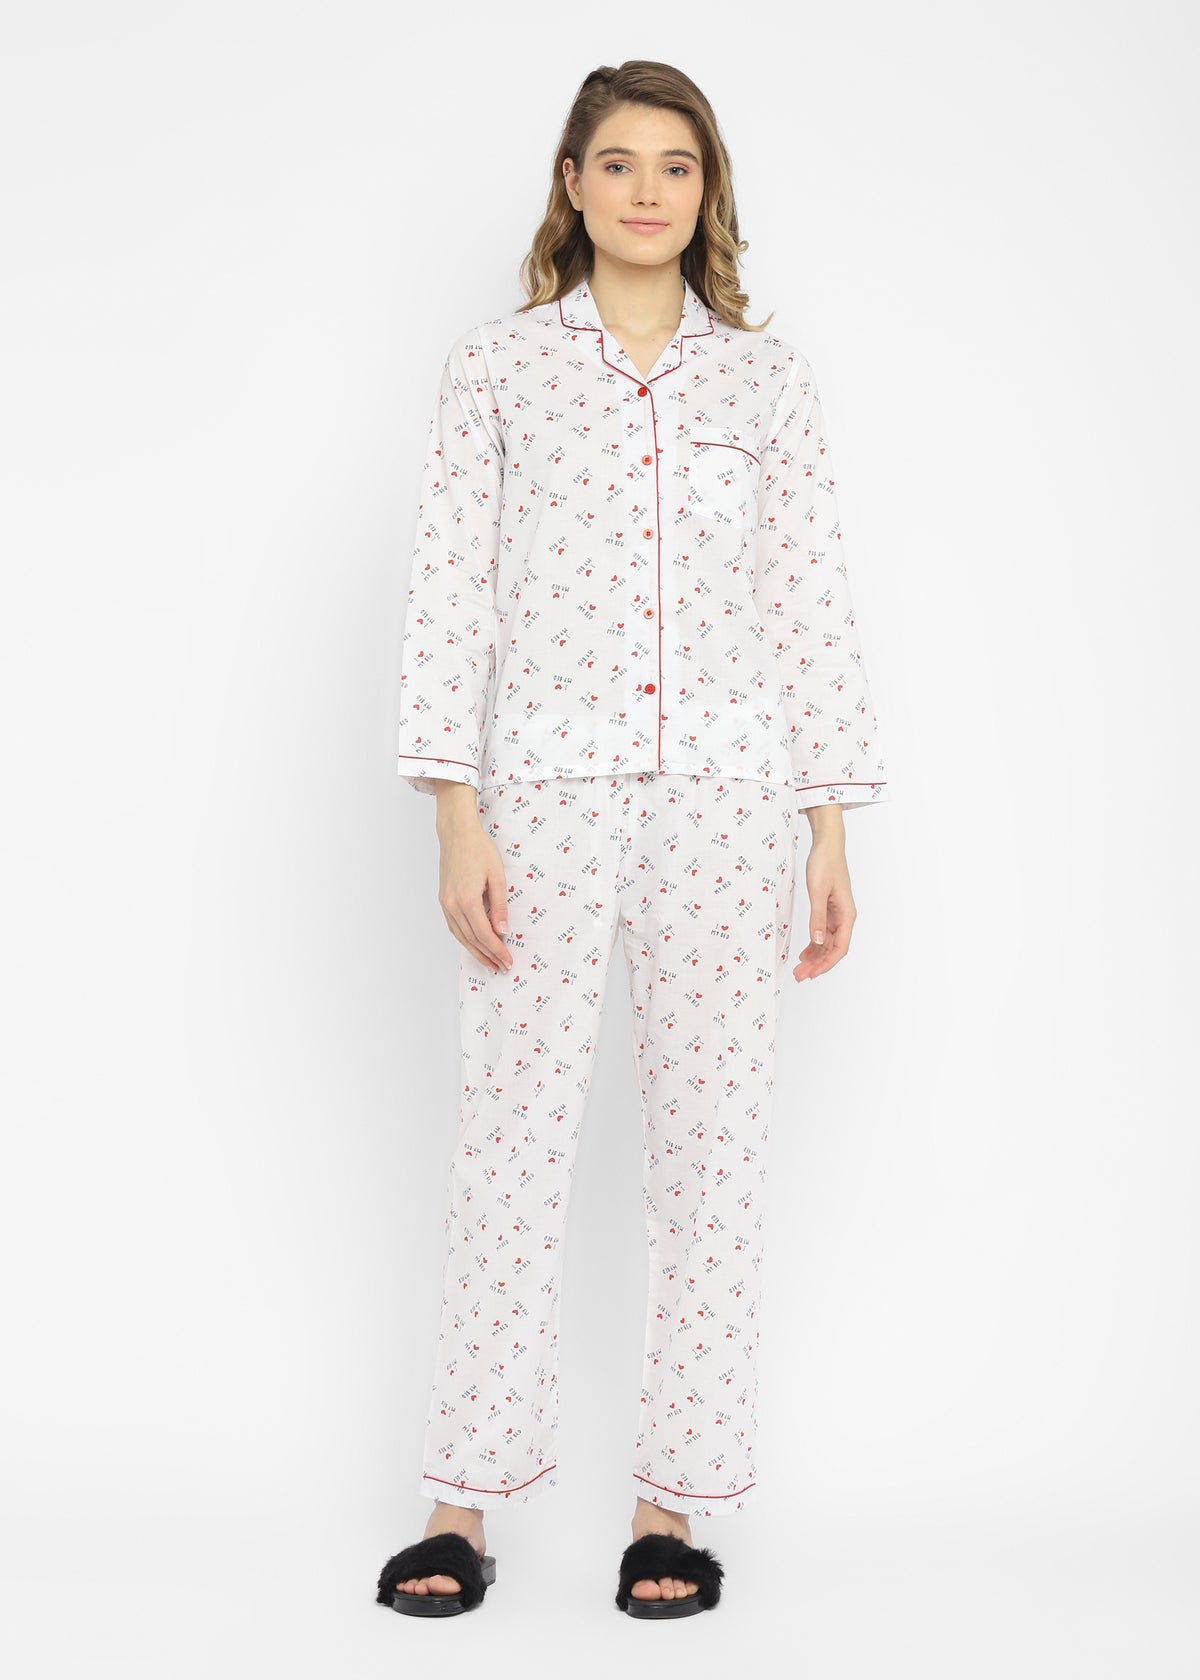 I Love My Bed Long Sleeve Women's Night Suit - Shopbloom